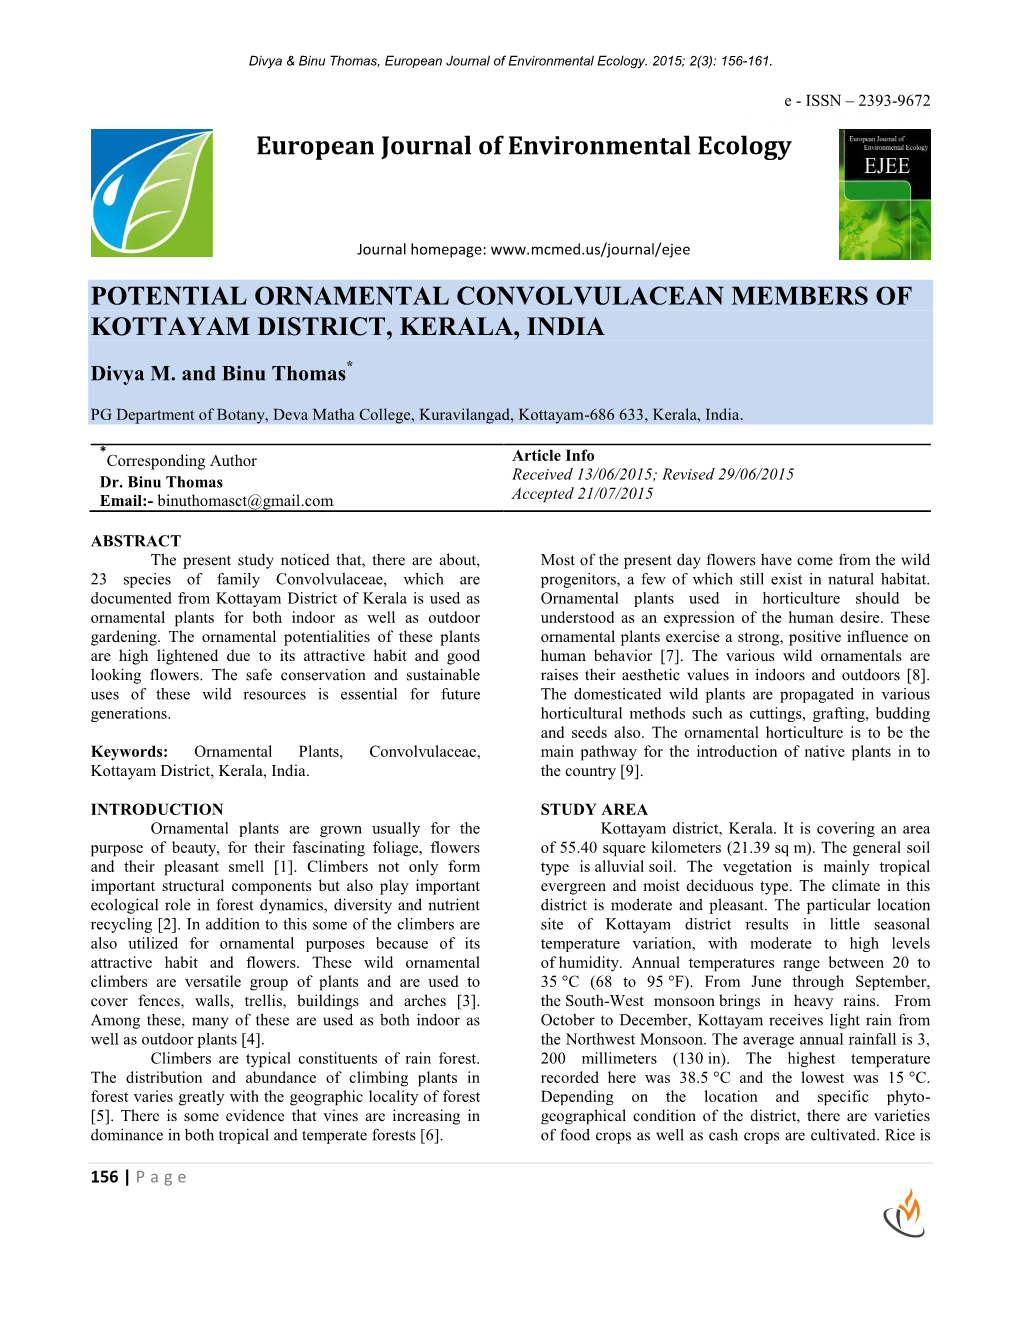 Euopean Journal of Molecular Biology and Biochemistry